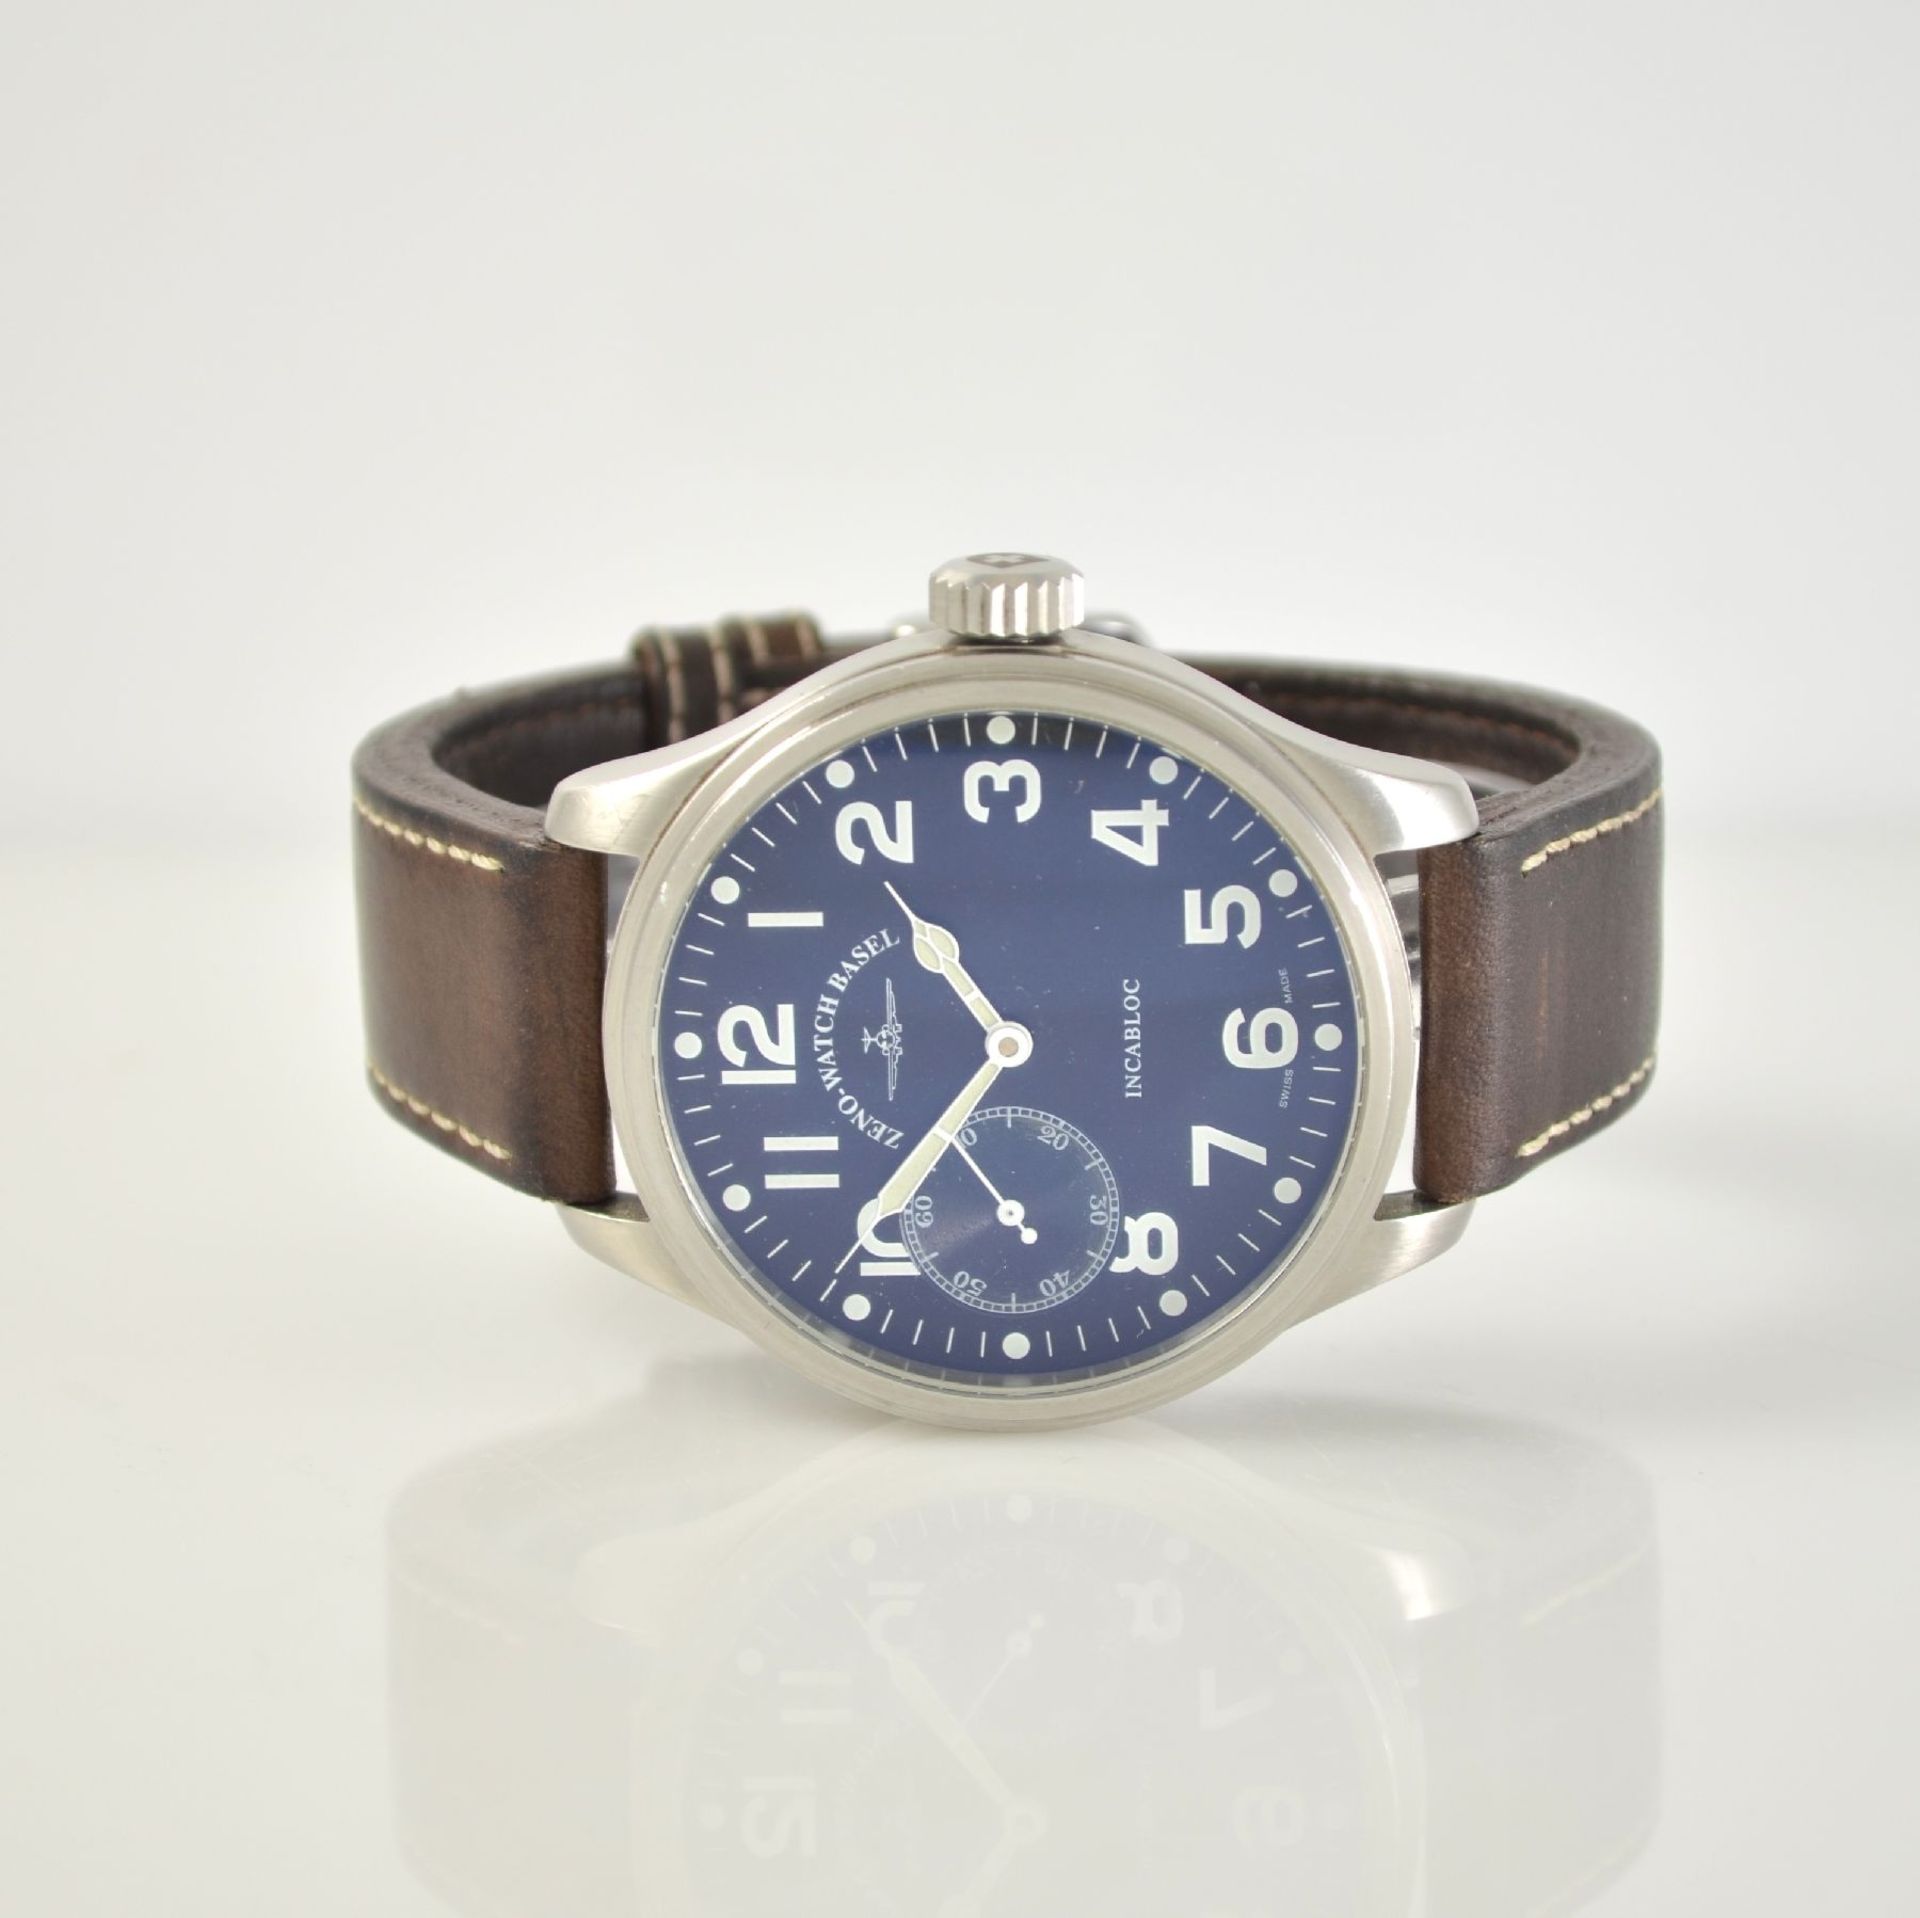 ZENO-WATCH BASEL Pilot big gents wristwatch, Switzerland sold in May 2006 according to warranty